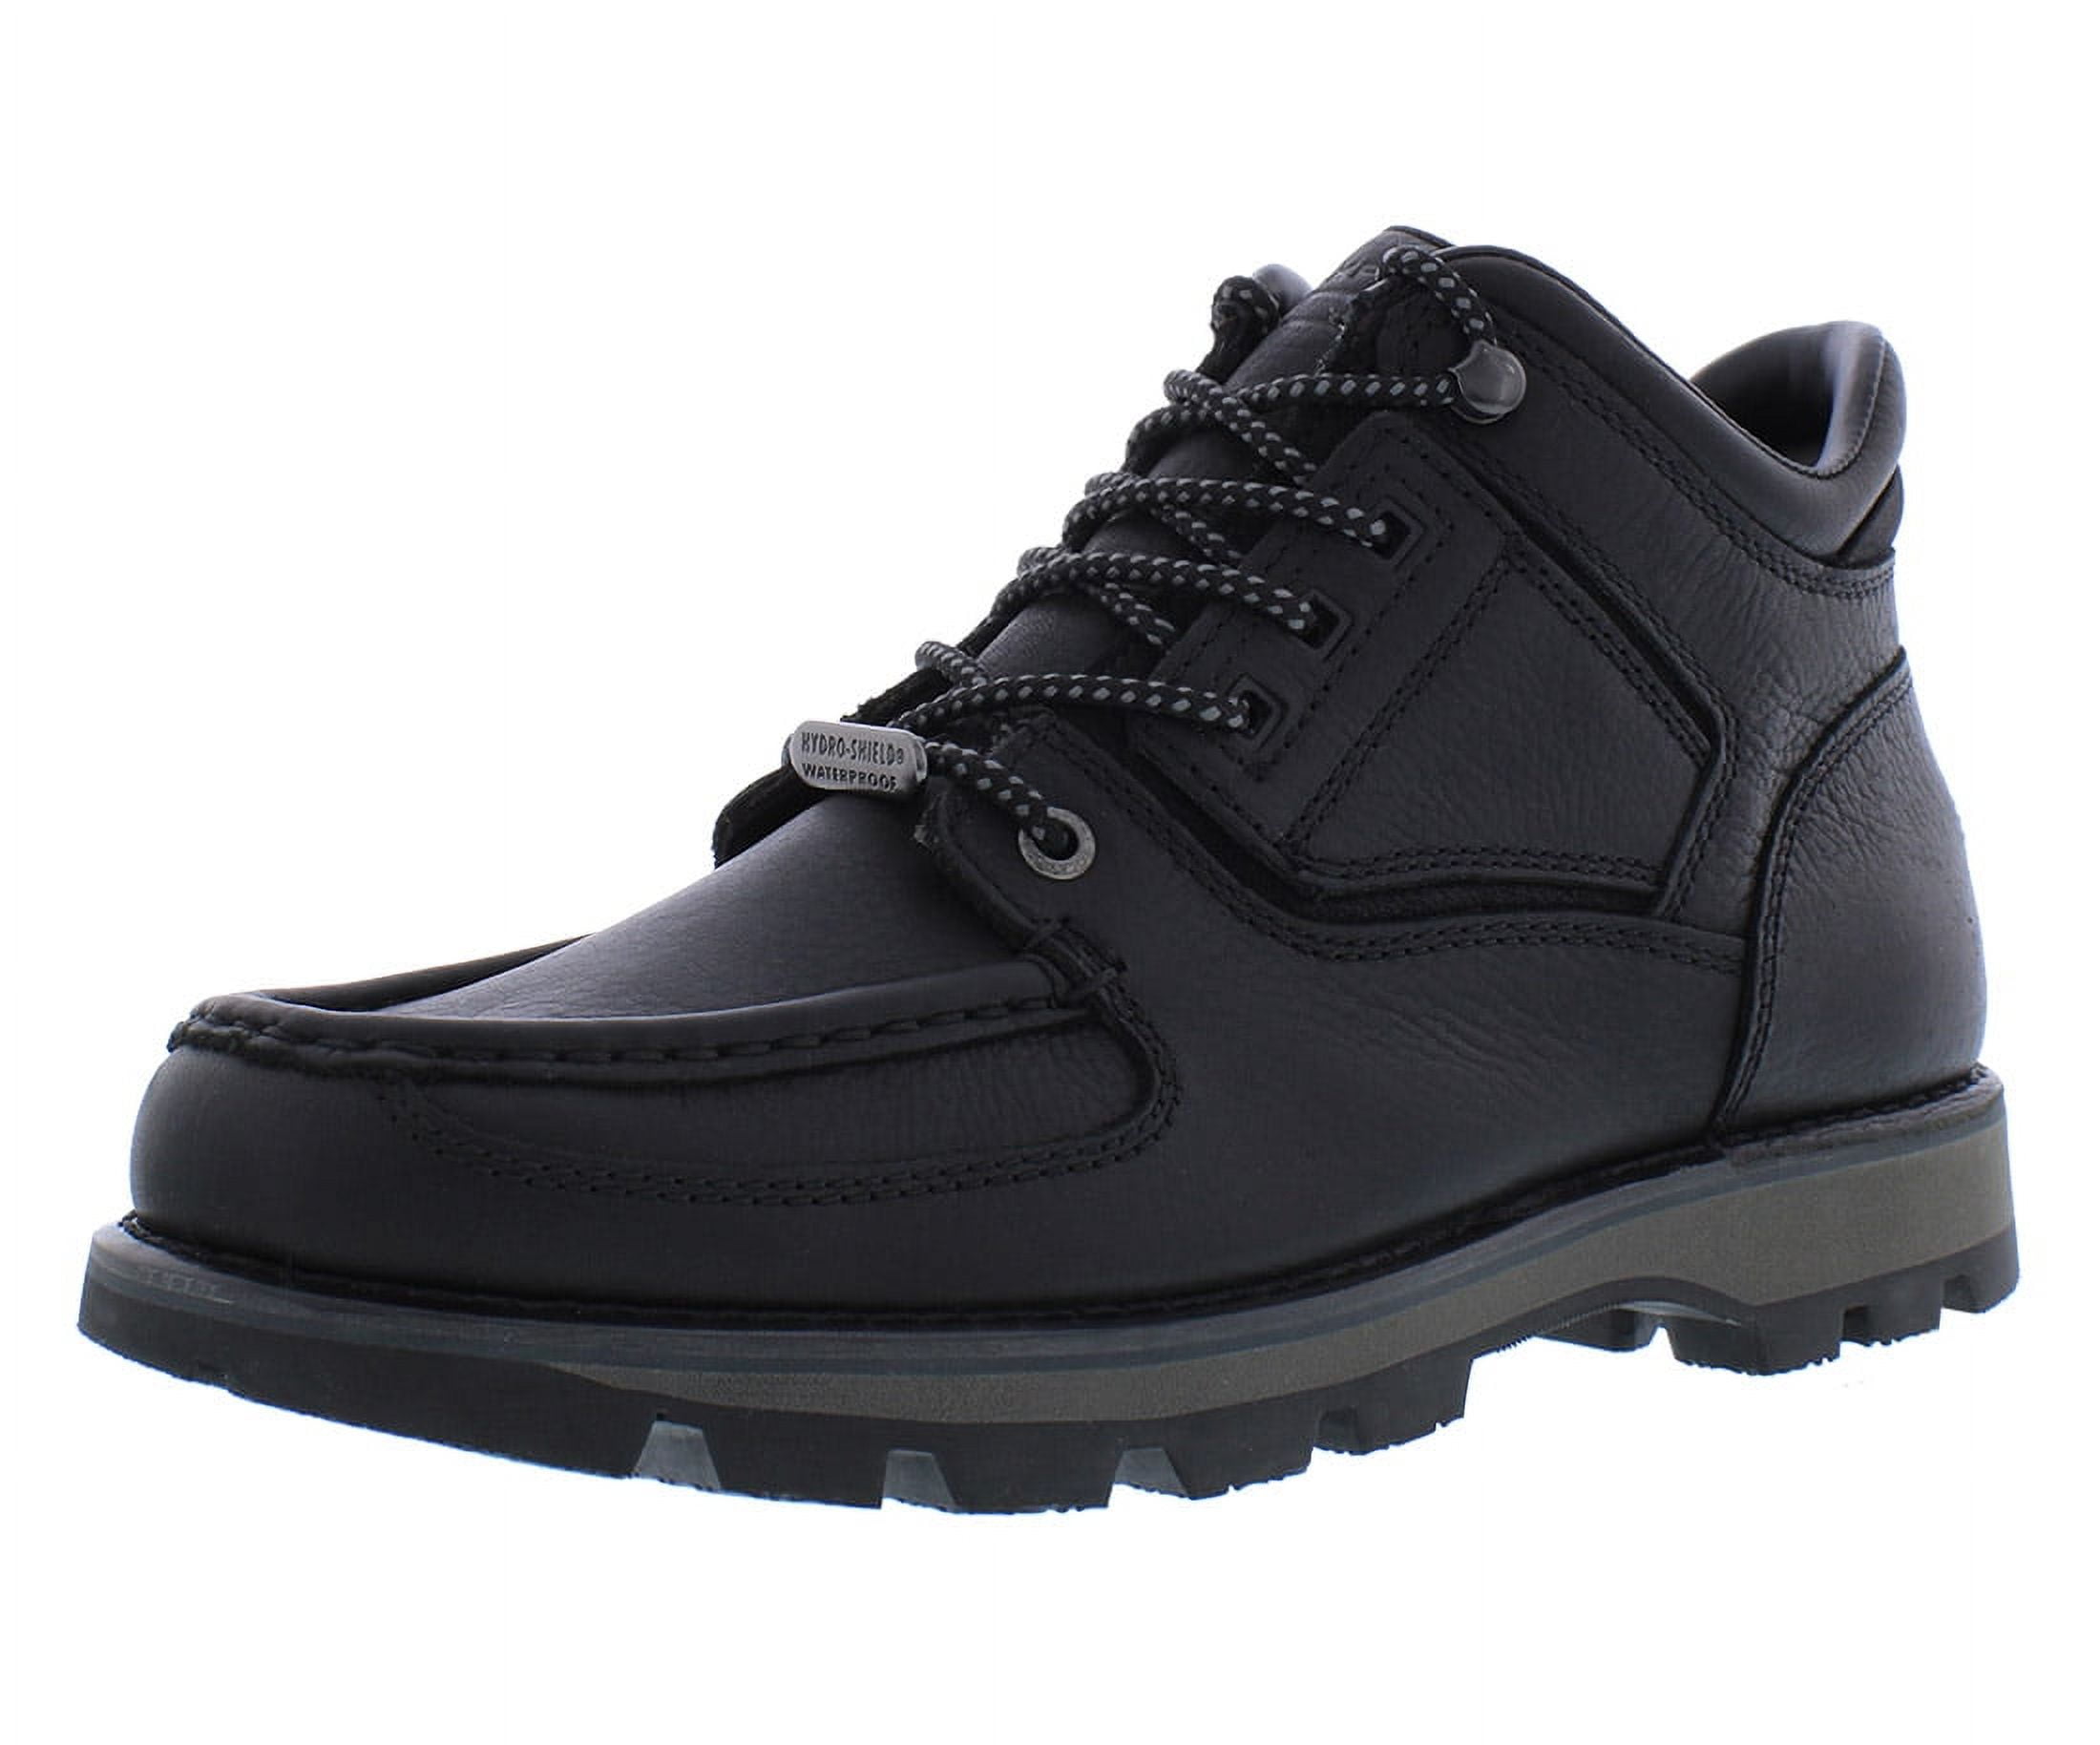 Rockport Umbwe II Trail Boot Men's Shoes Size 9, Color: Brown - Walmart.com